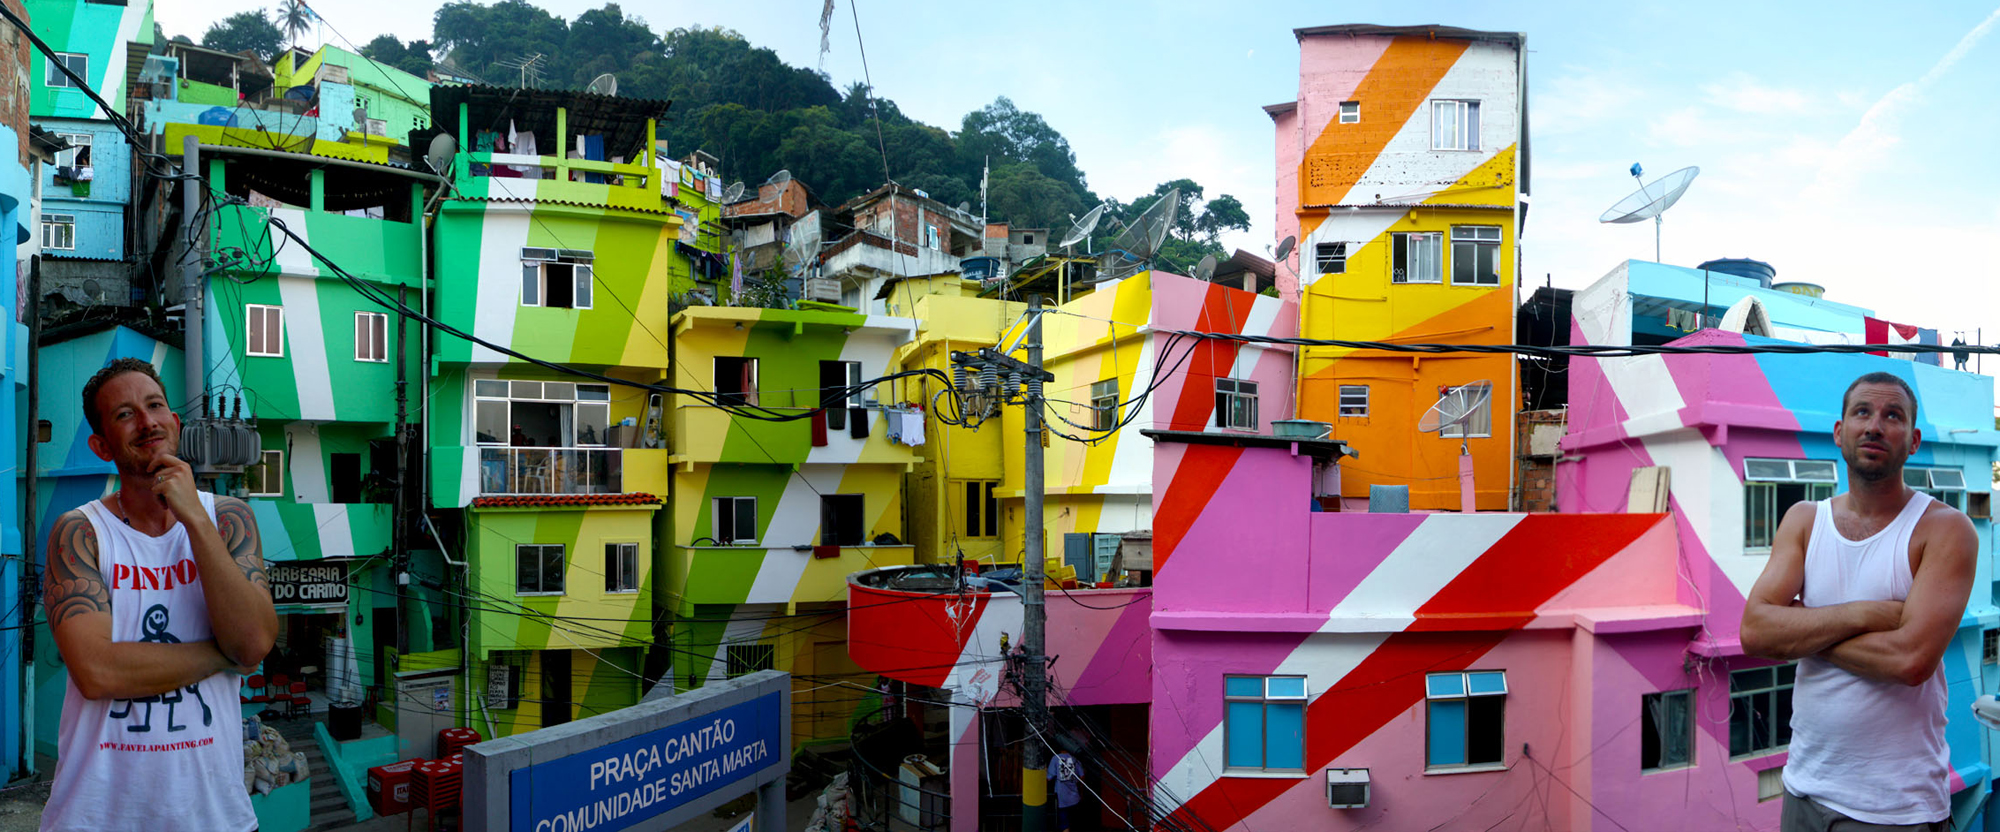 Resultado de imagen para favela de santa marta rio de janeiro